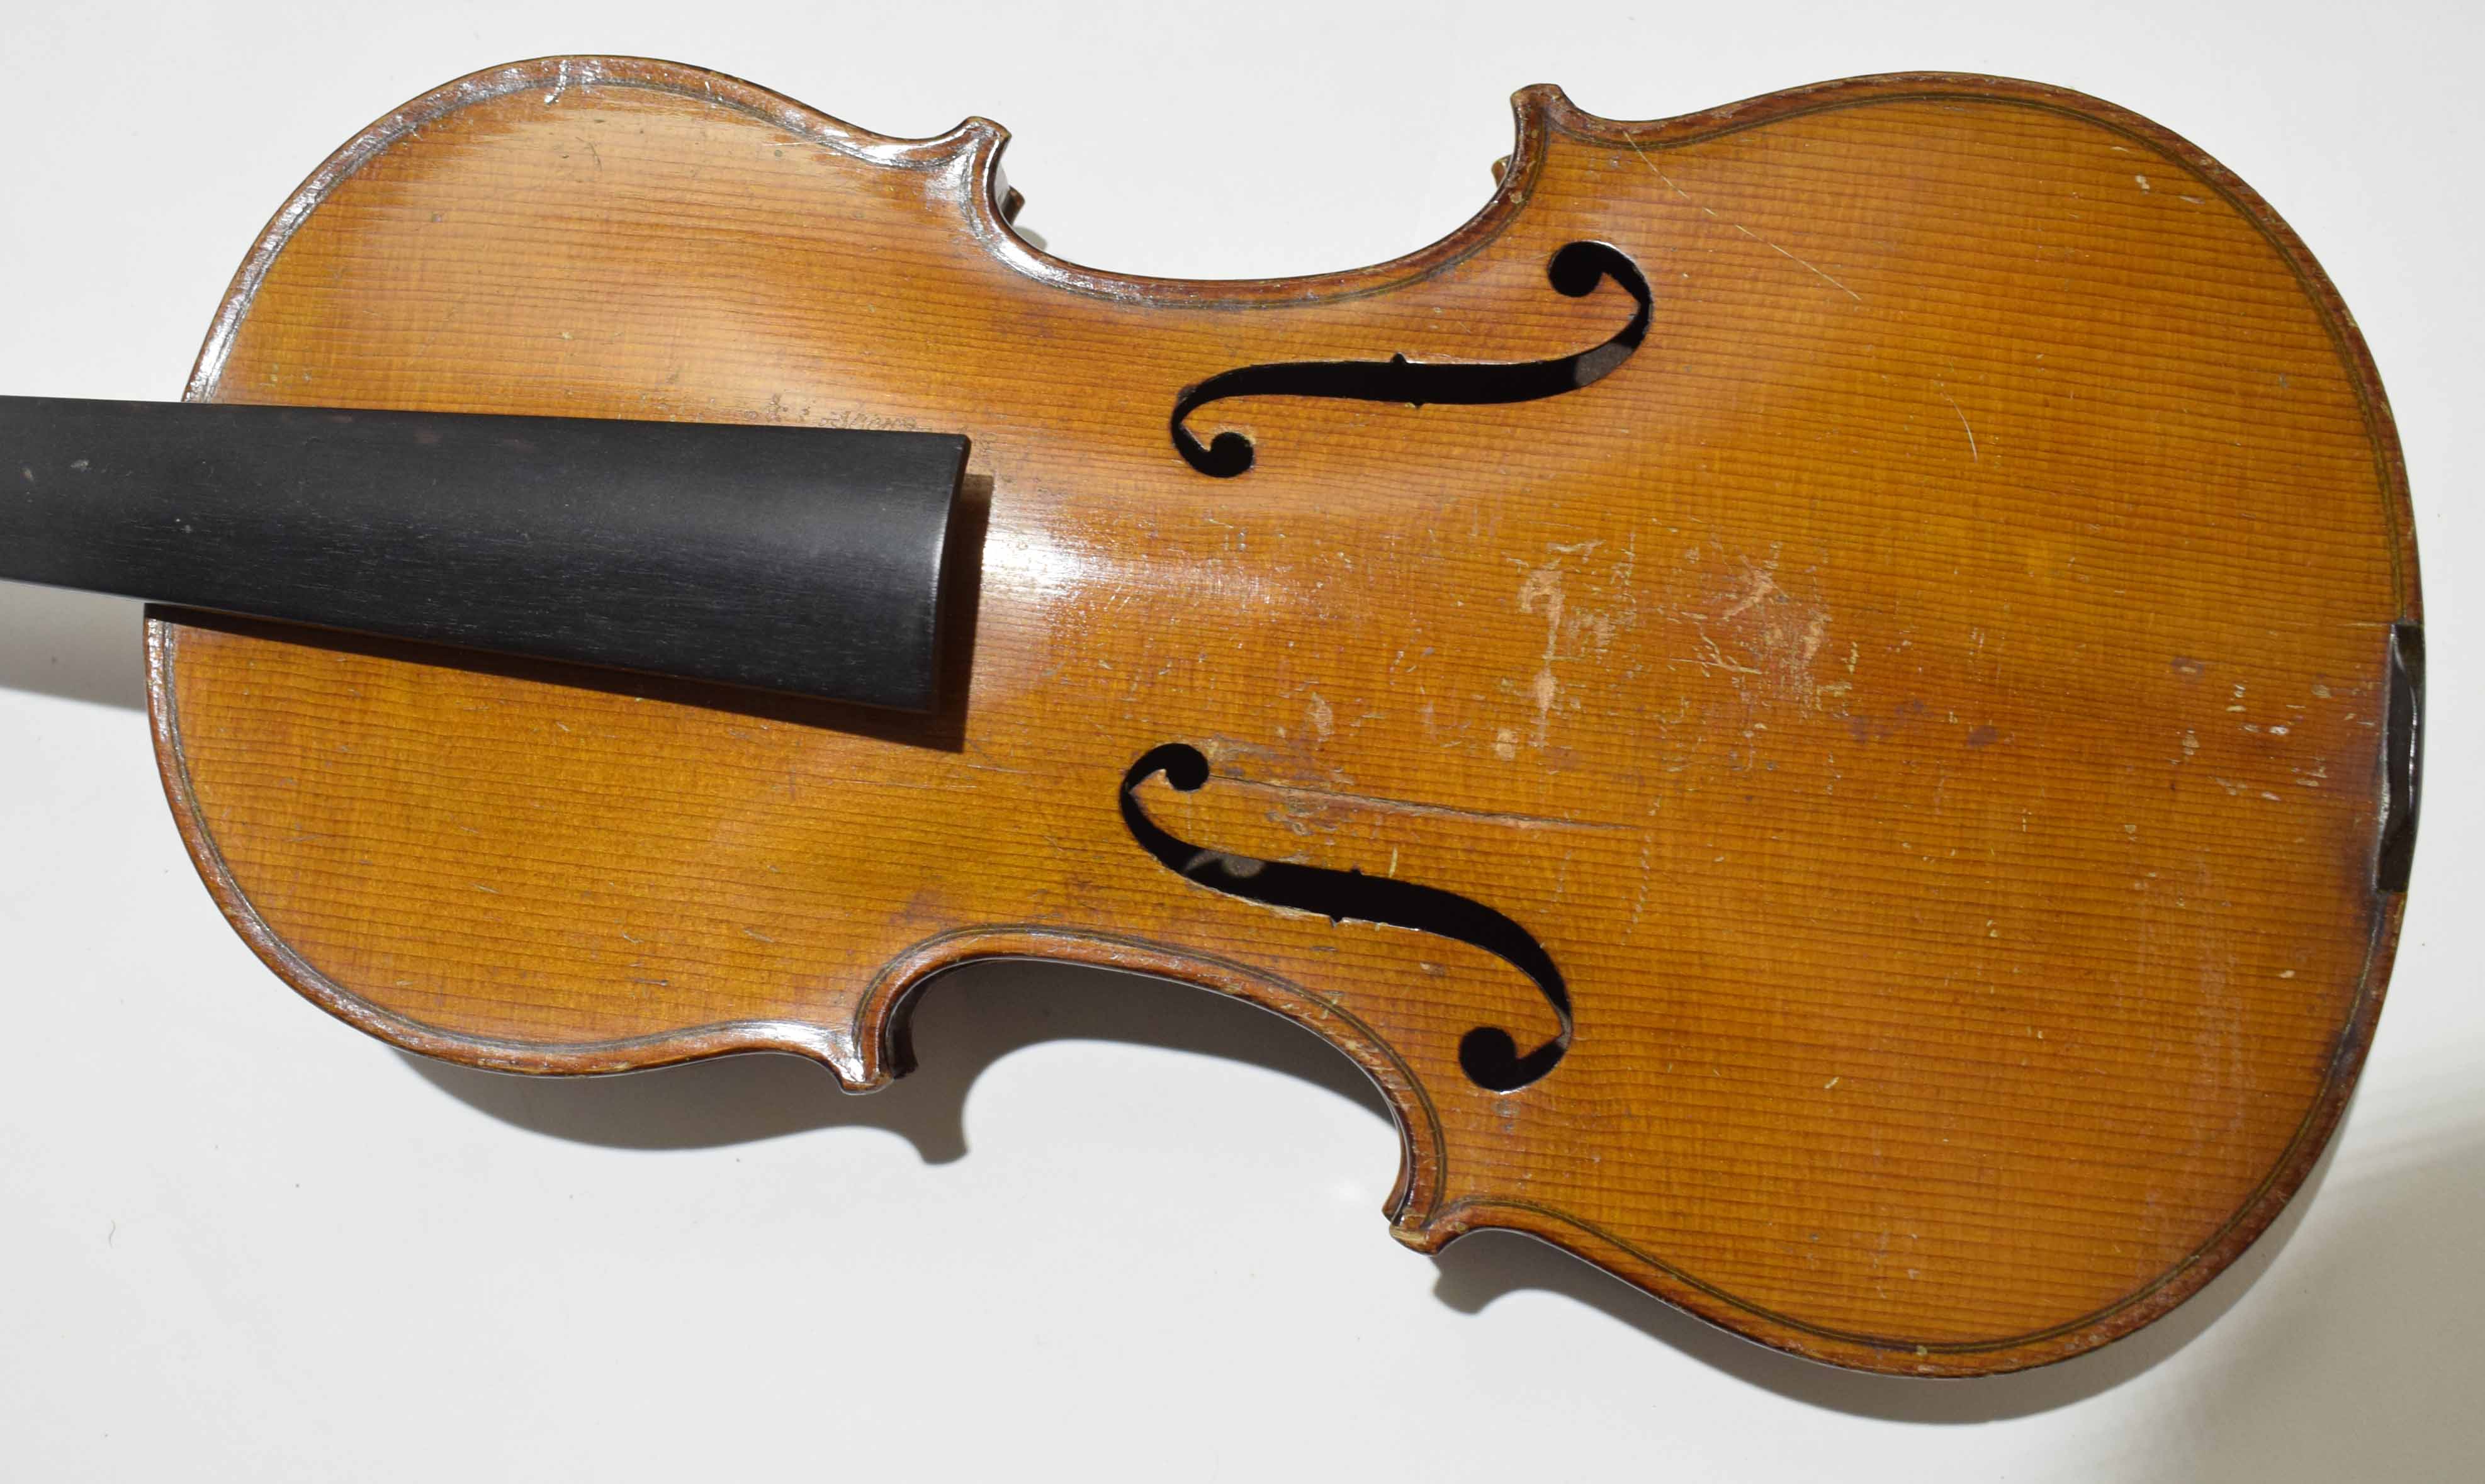 Vintage ebonised wooden cased violin and bow (lacking strings) (af) - Image 4 of 7